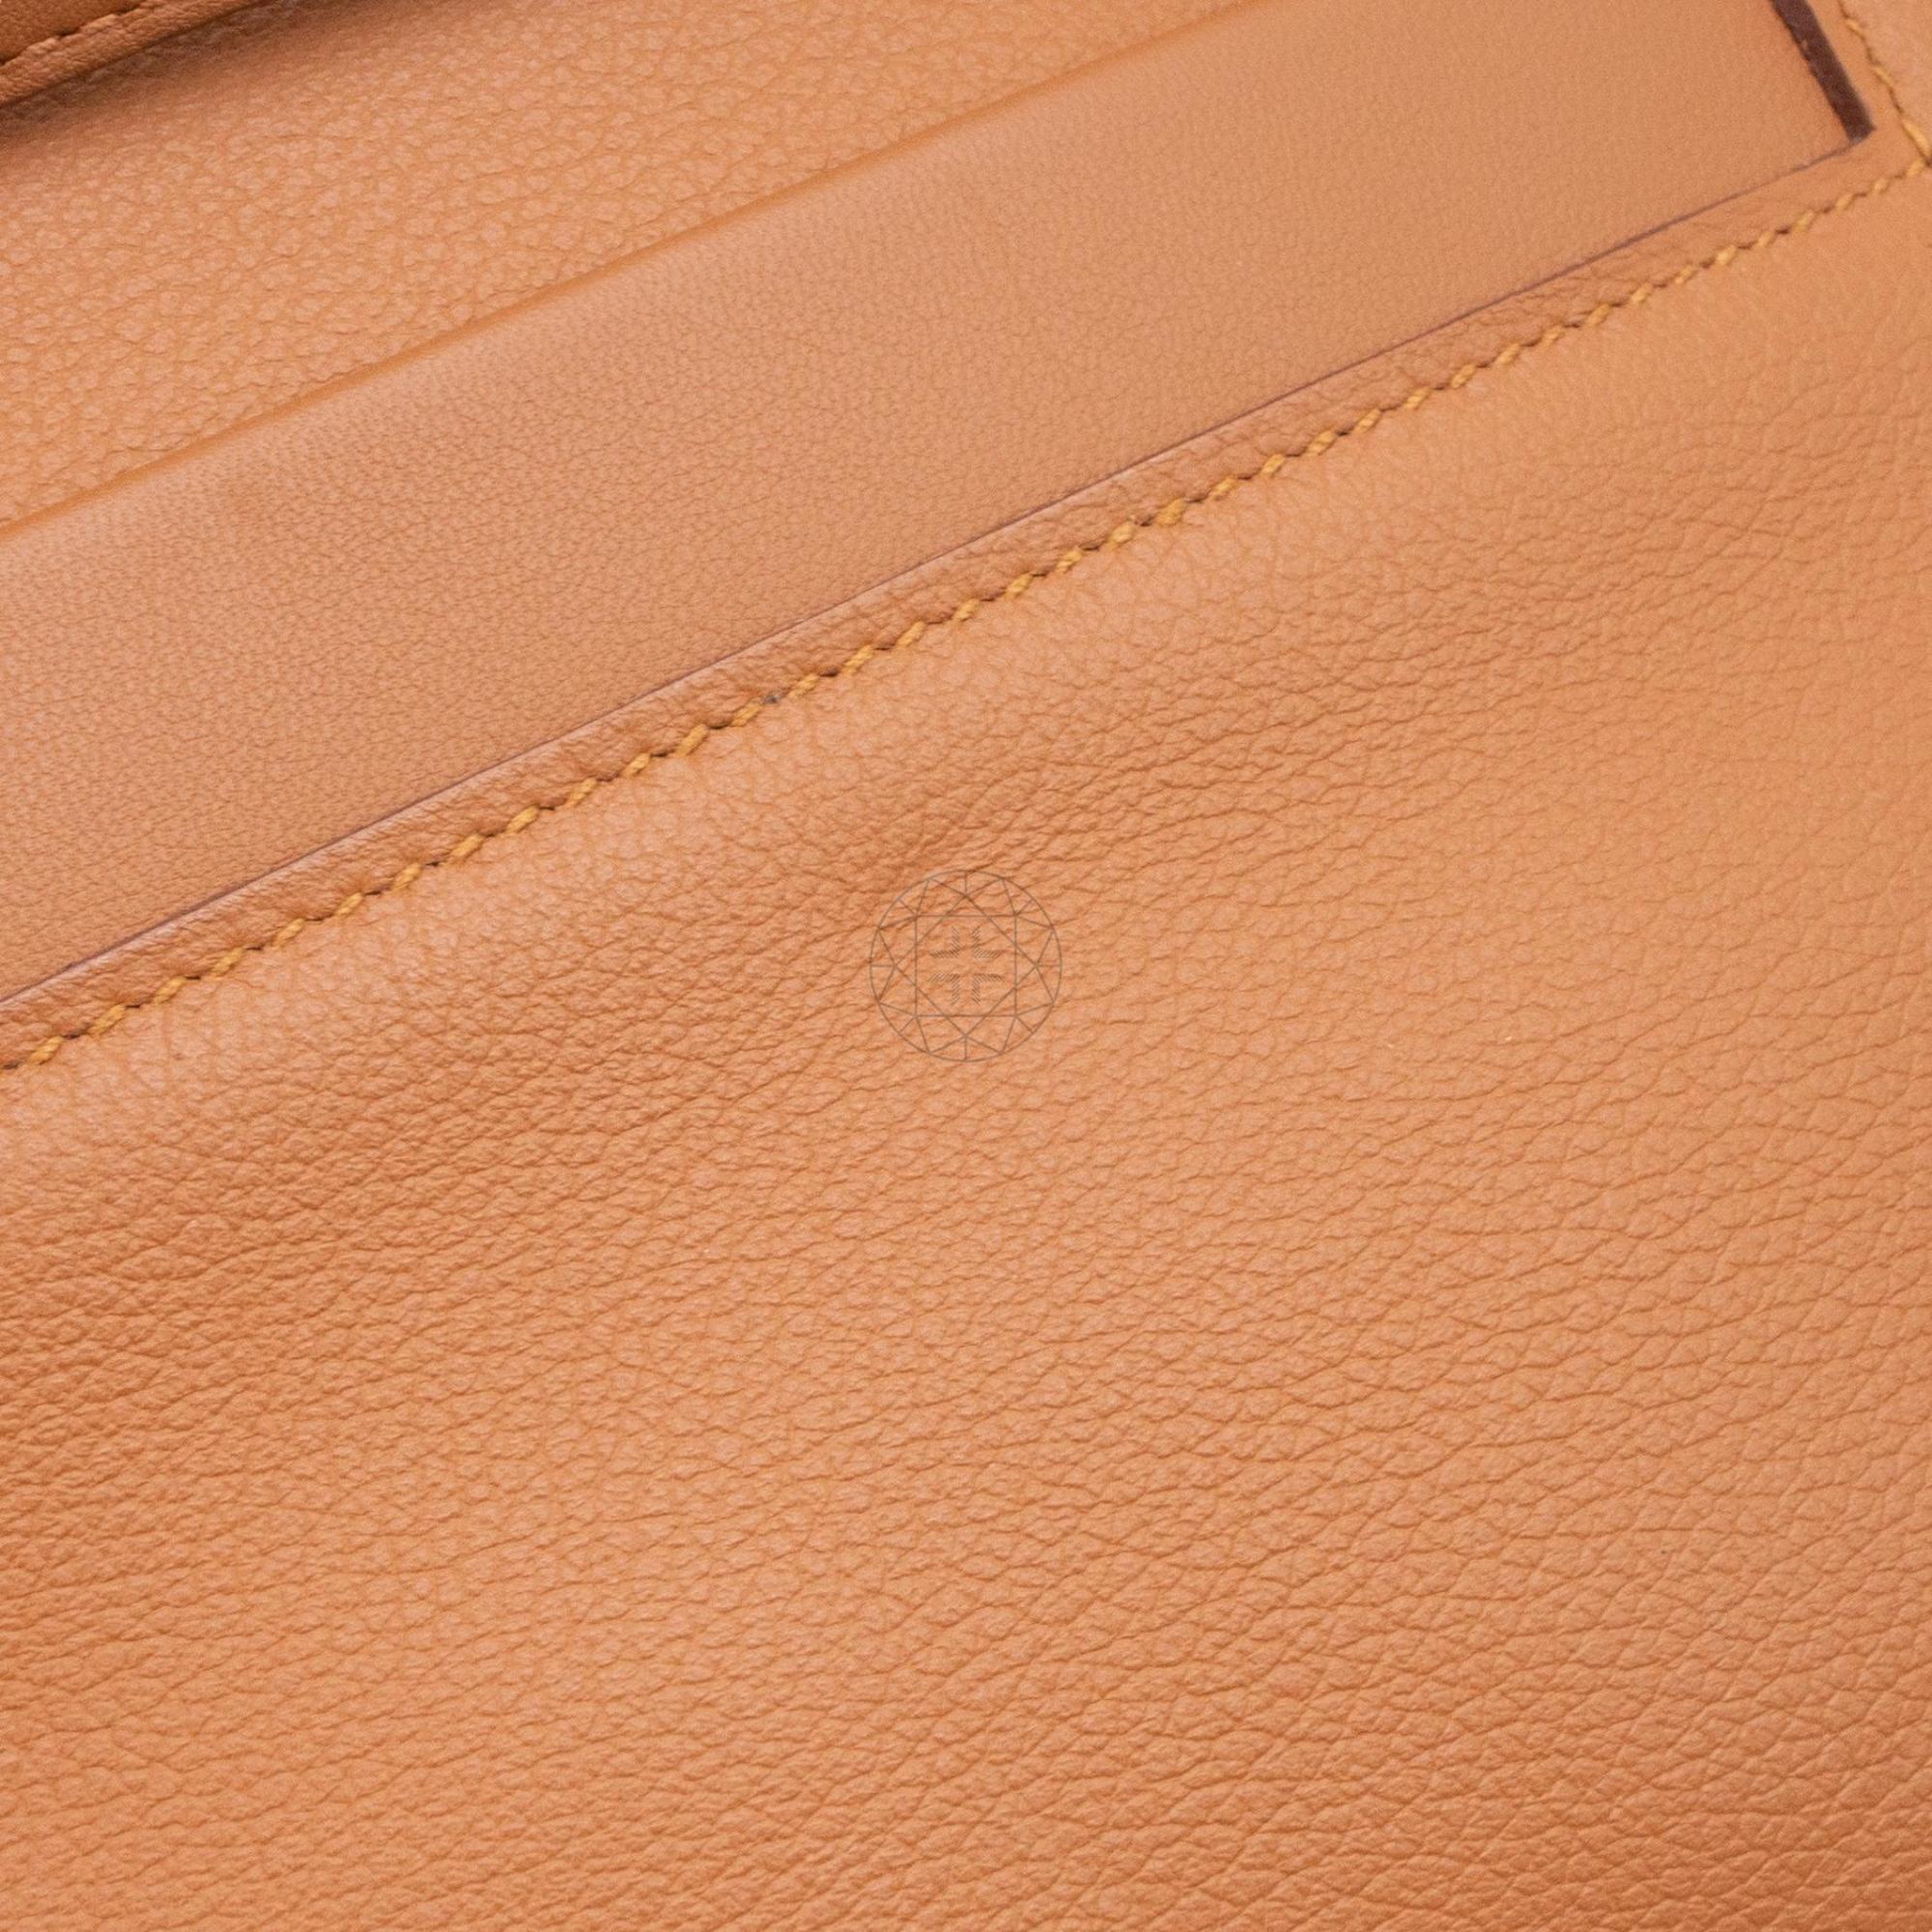 Hermès 24/24 Mini In Gold With GHW Bag